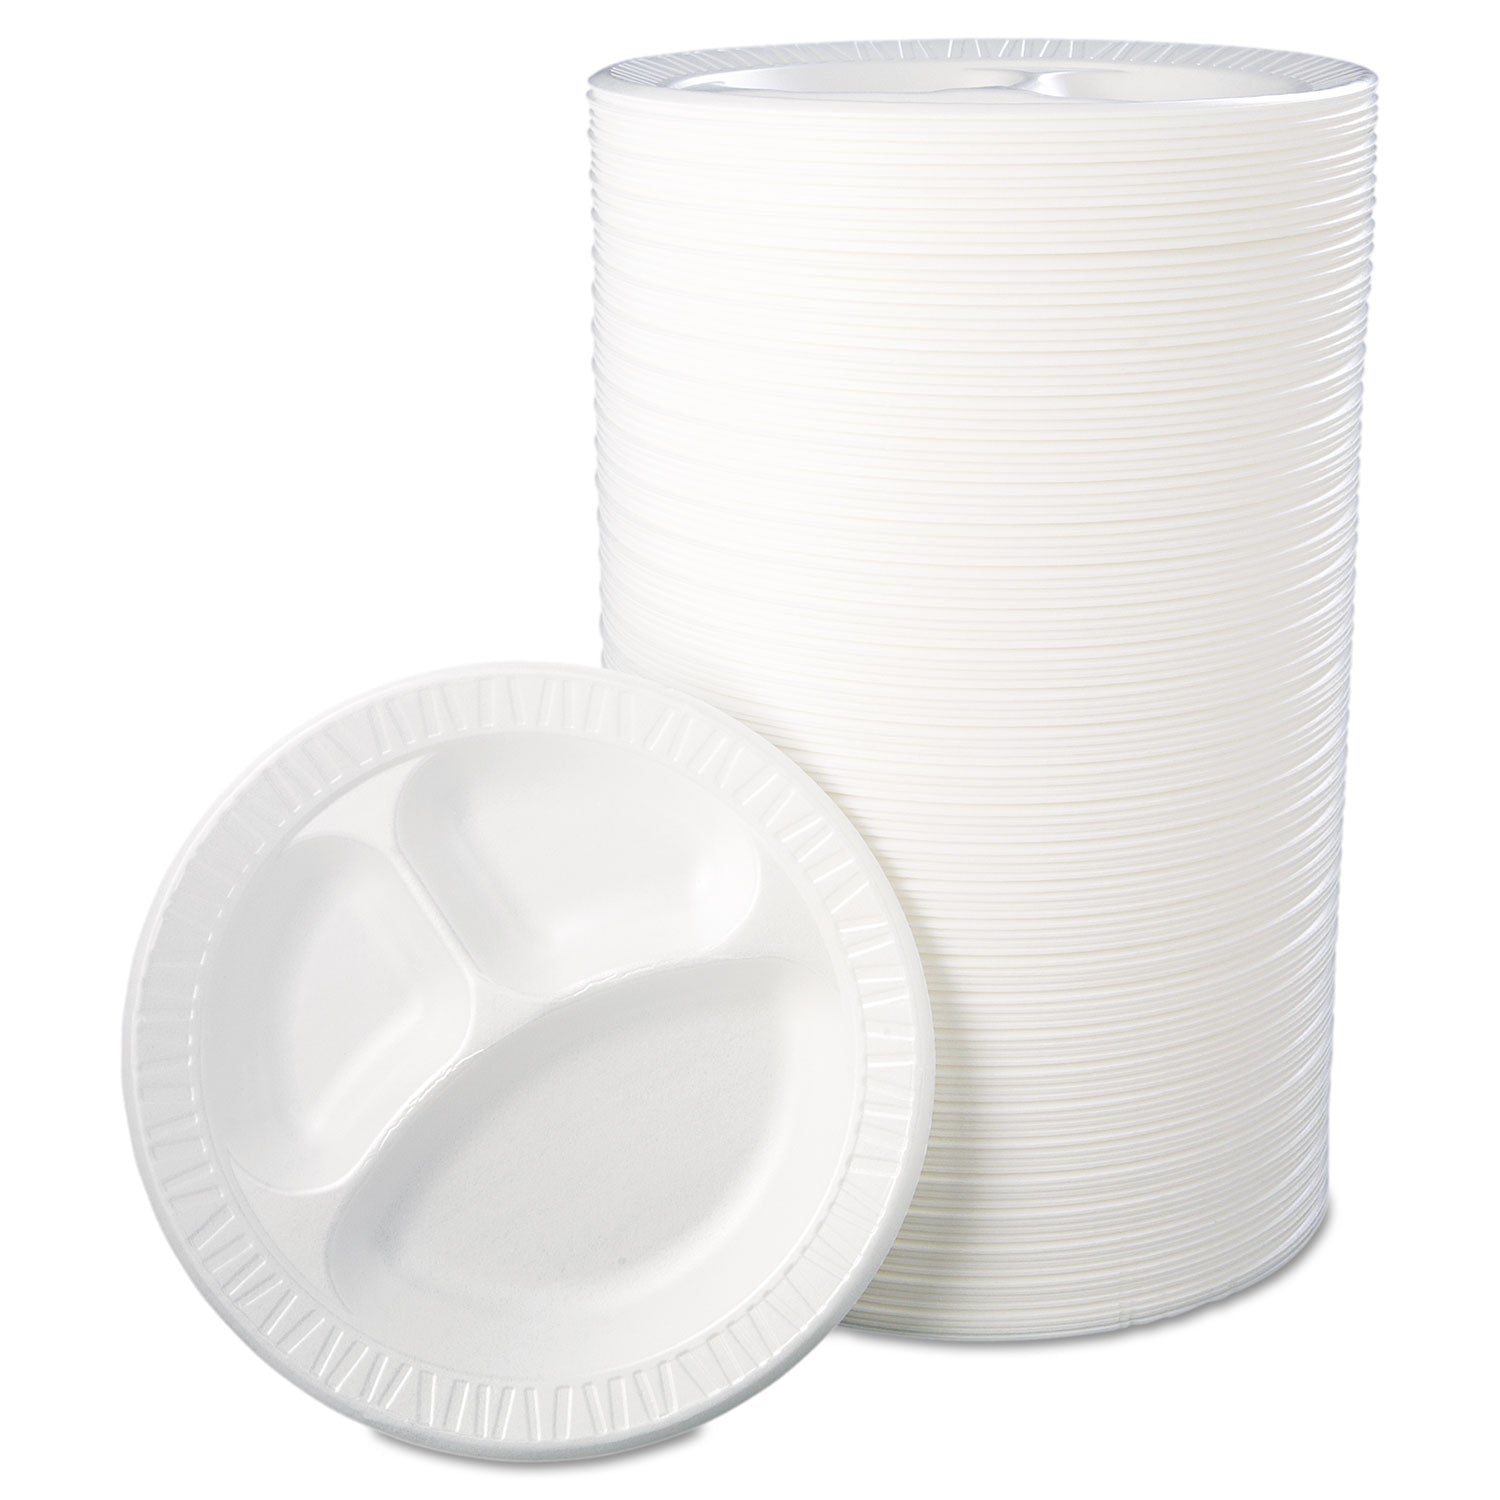 Quiet Class Laminated Foam Dinnerware, Plates, 3-Compartment, 10.25" dia, White, 125/Pack, 4 Packs/Carton - 